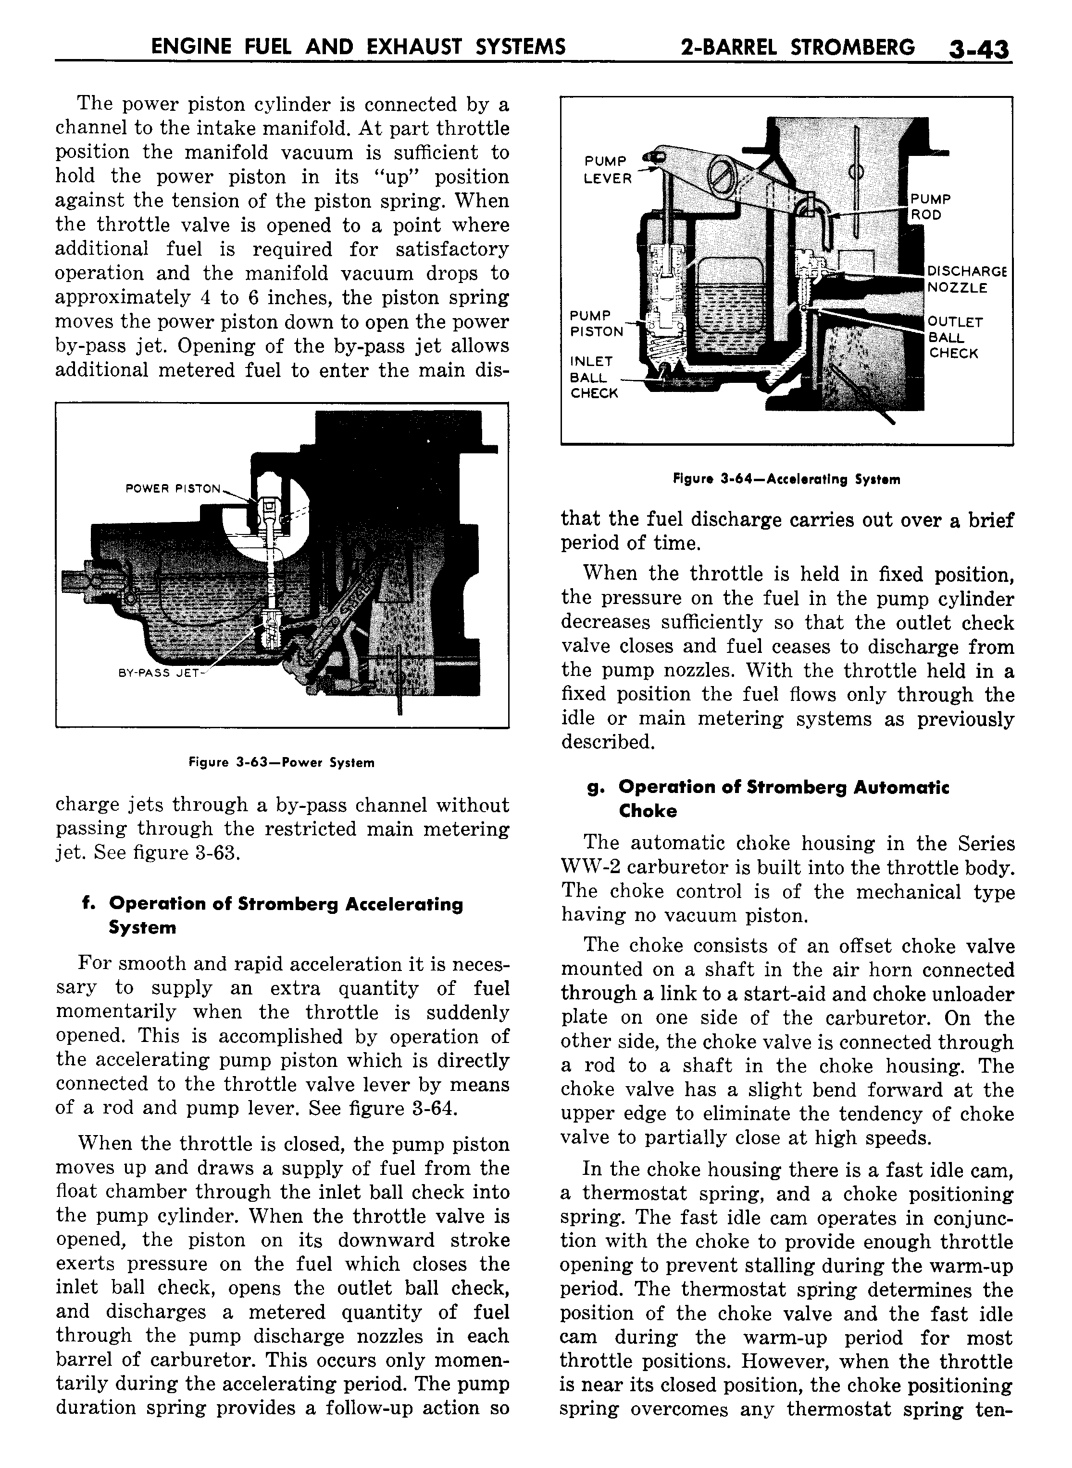 n_04 1957 Buick Shop Manual - Engine Fuel & Exhaust-043-043.jpg